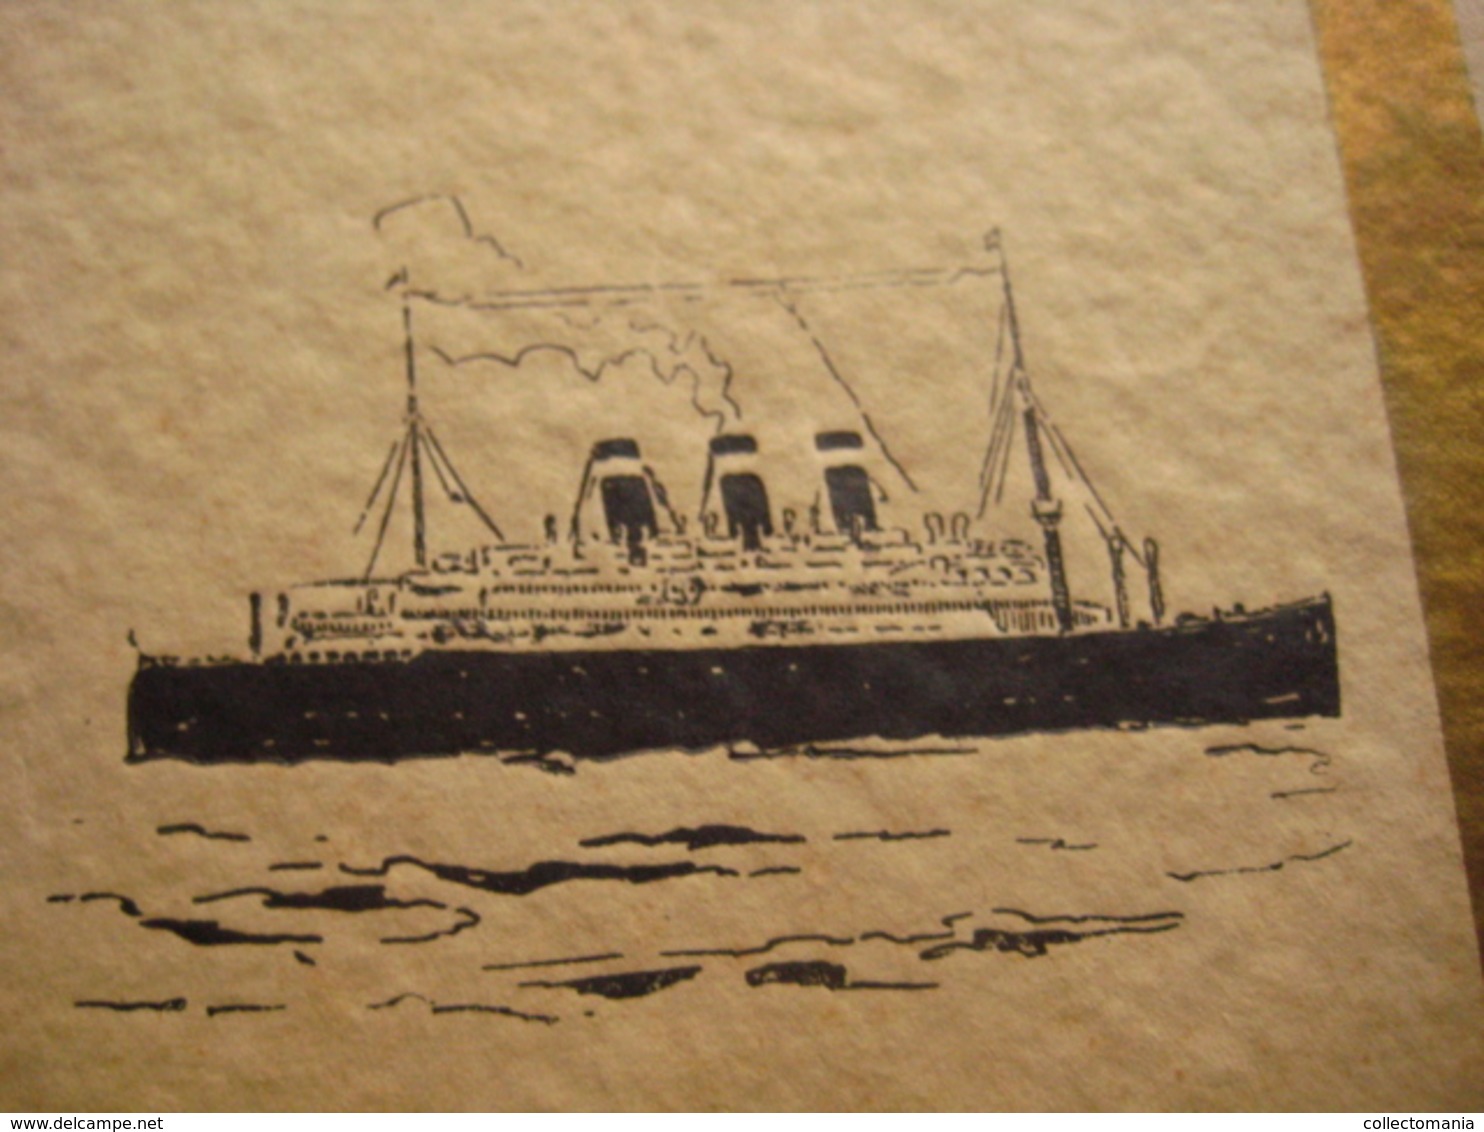 Red Star Line World Cruise - Shipping calendar 12 months - illustrator VAN ROOSE Belgenland approx 1930 Antwerpen VG